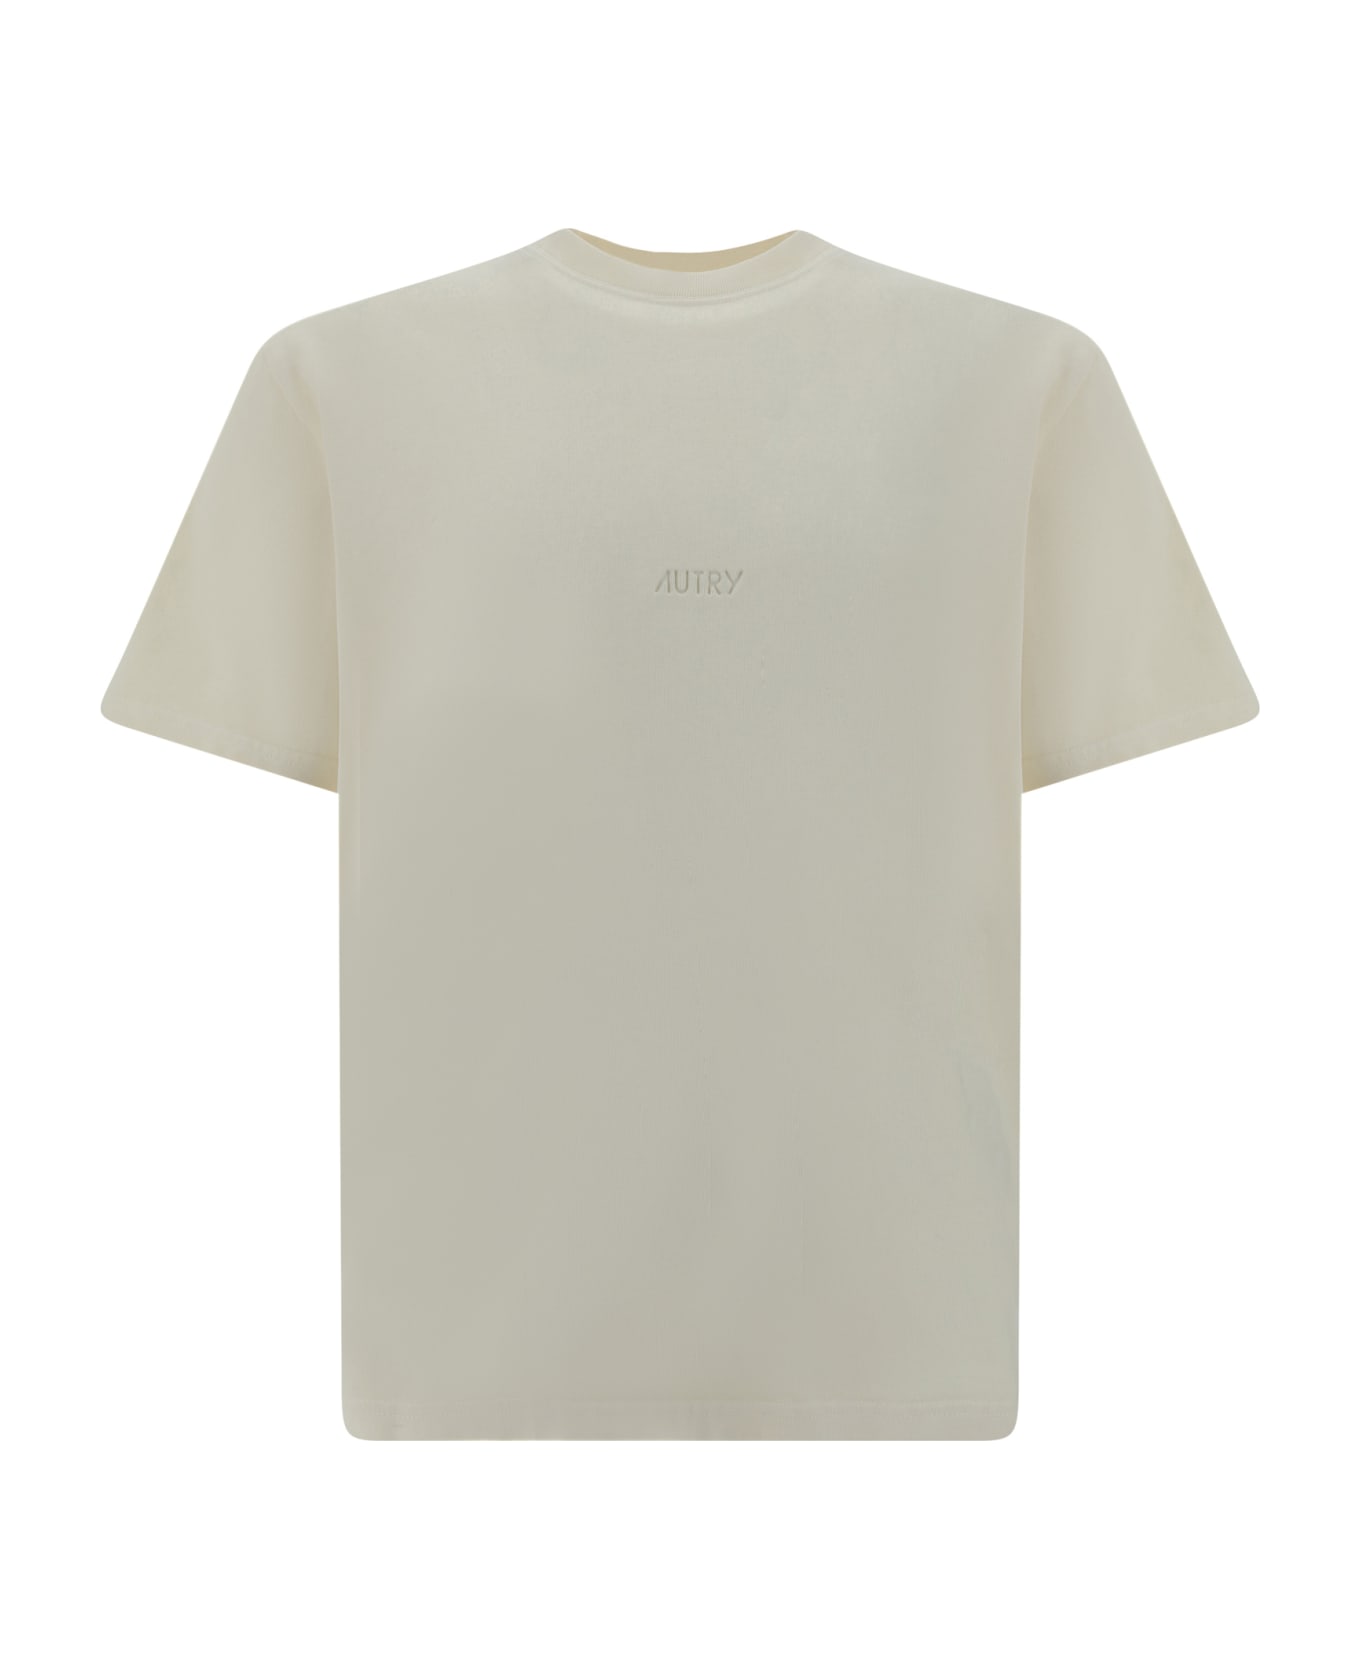 Autry T-shirt - Cream シャツ